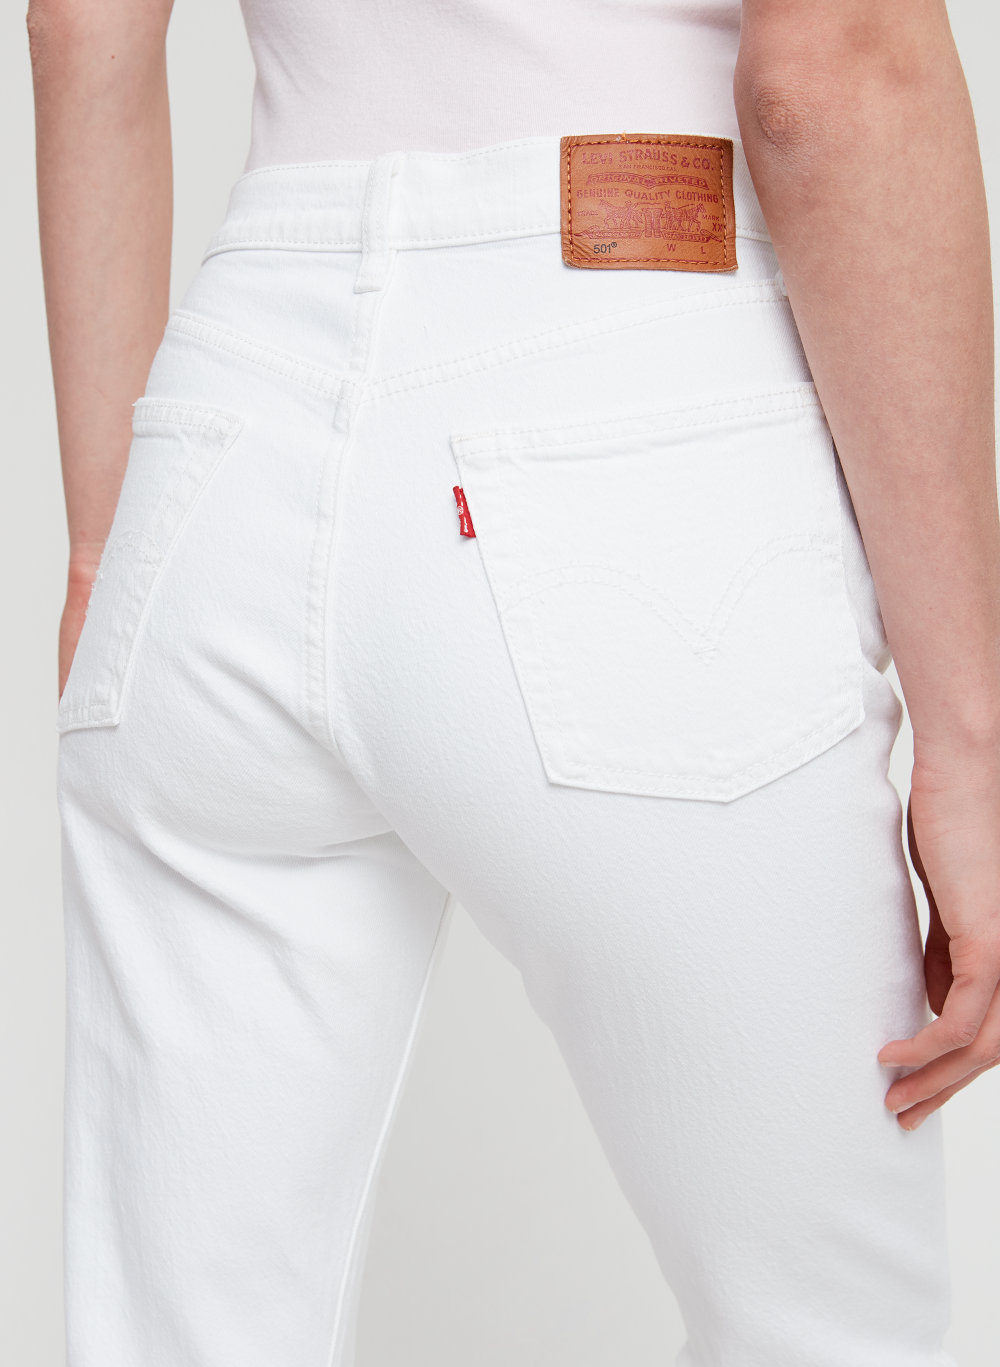 levi's white jeans